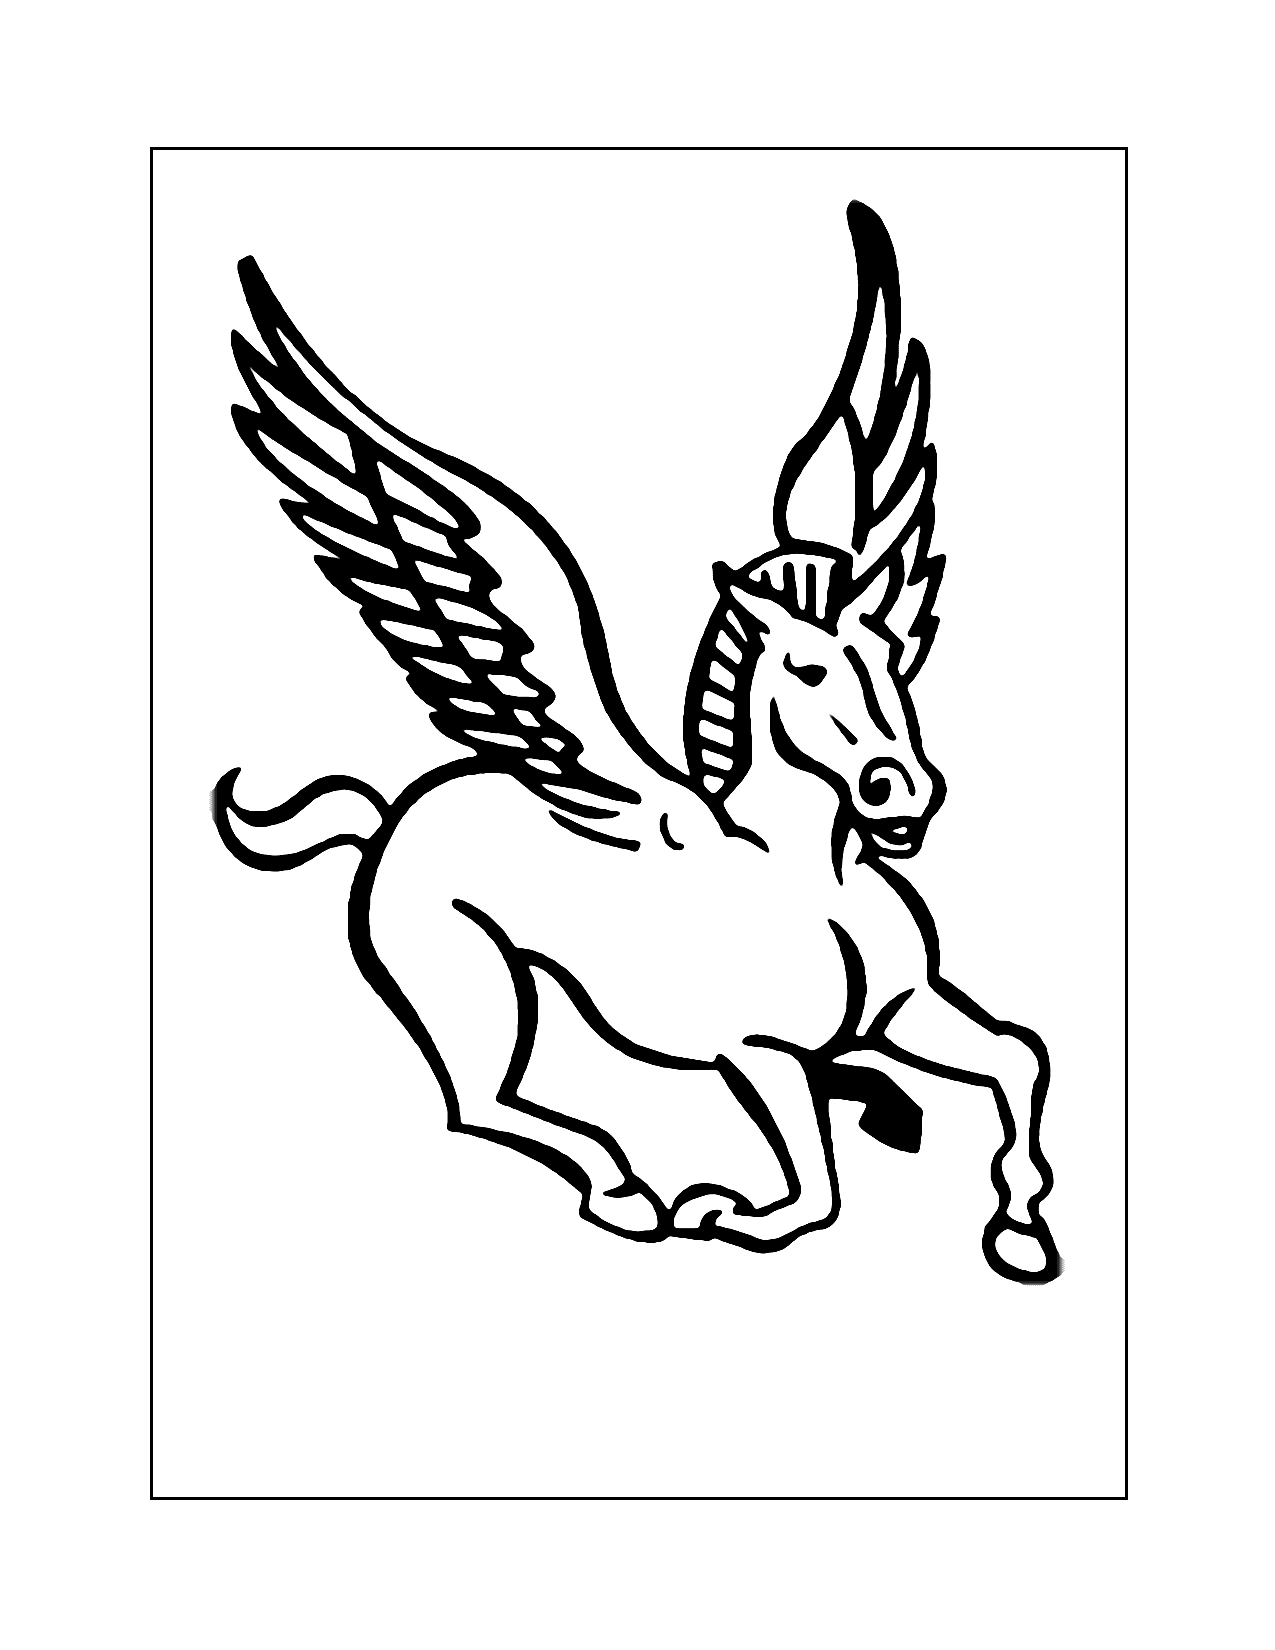 Pegasus Flying Coloring Page